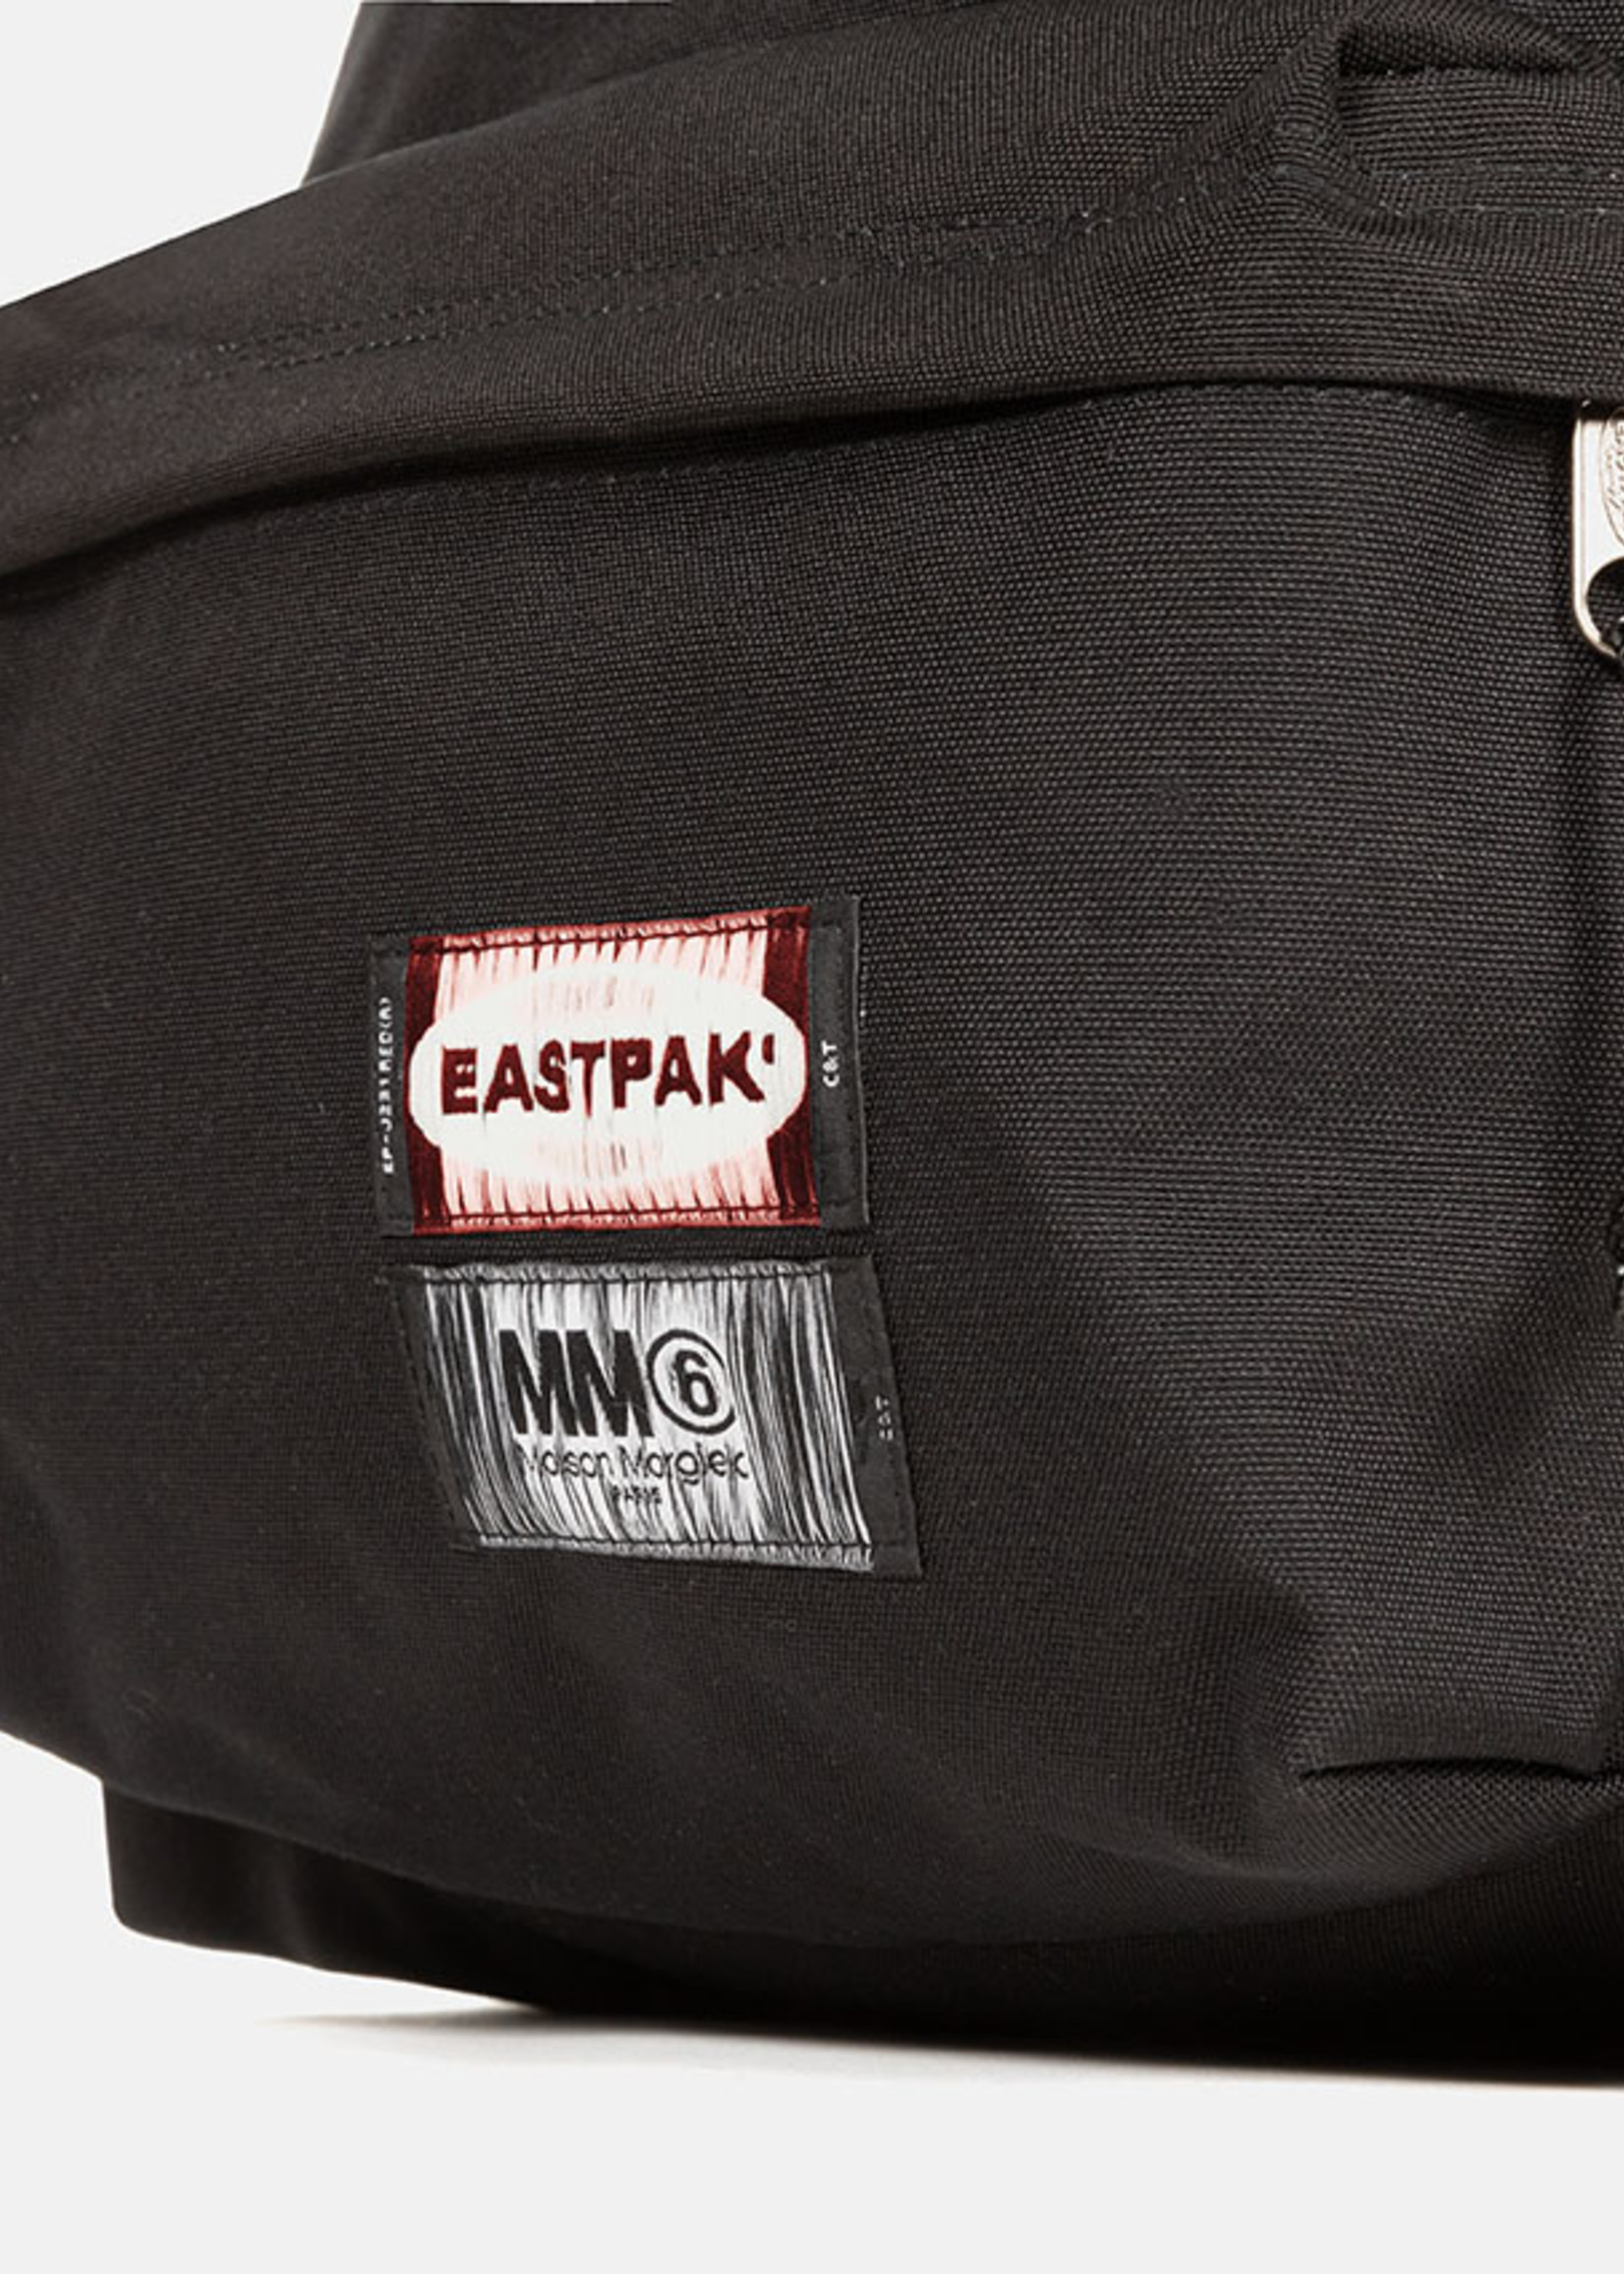 MM6 MAISON MARGIELA MM6 X Eastpak Reversible Backpack in Black and White